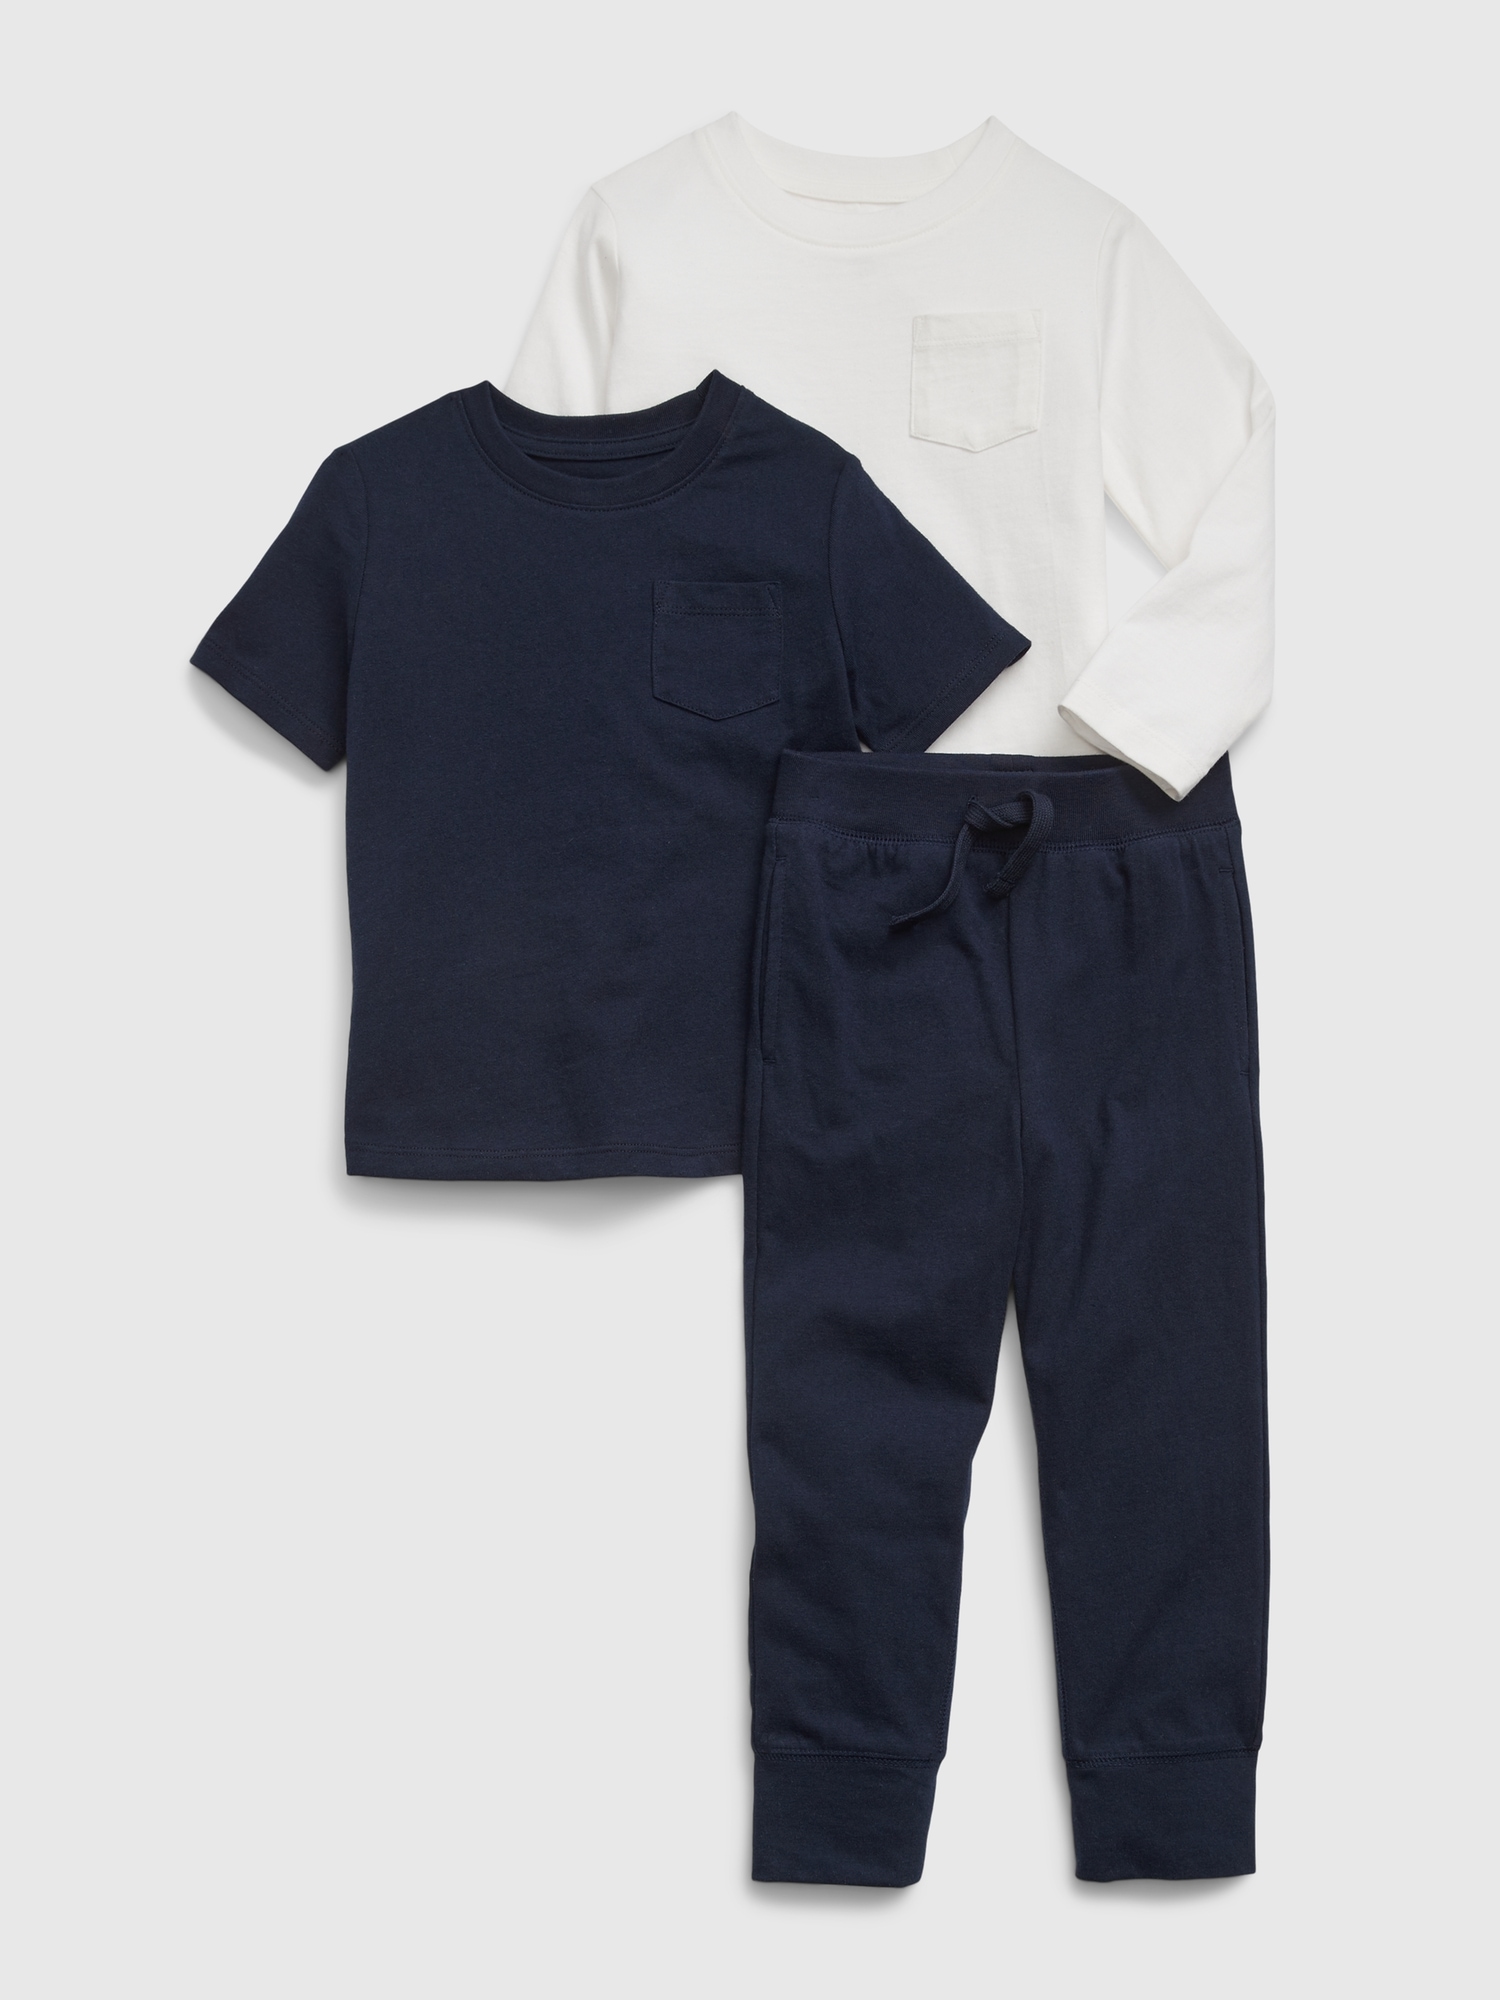 Toddler Organic Cotton Mix and Match Outfit Set